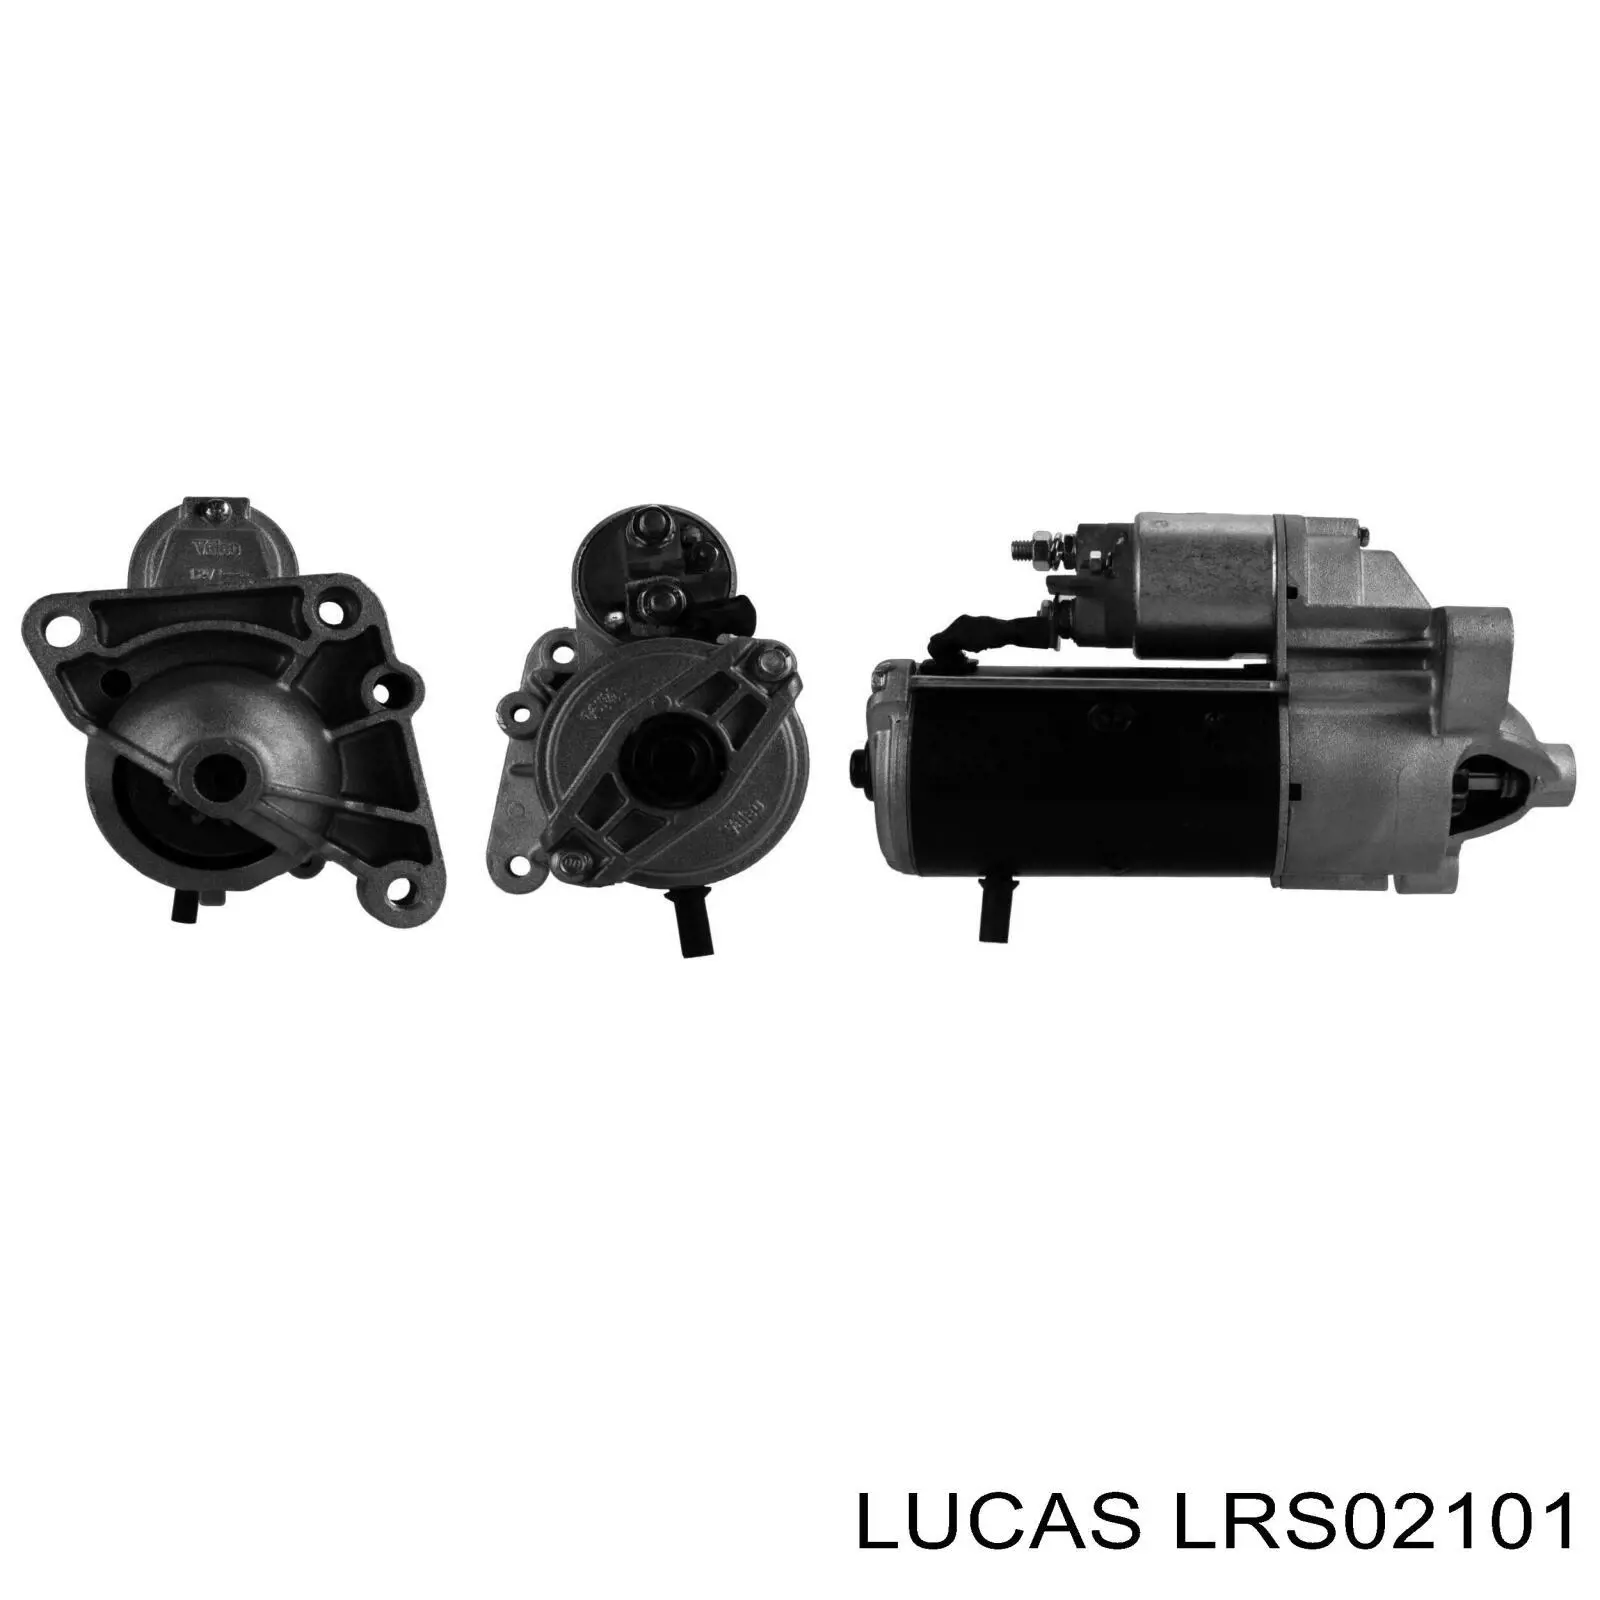 LRS02101 Lucas motor de arranque